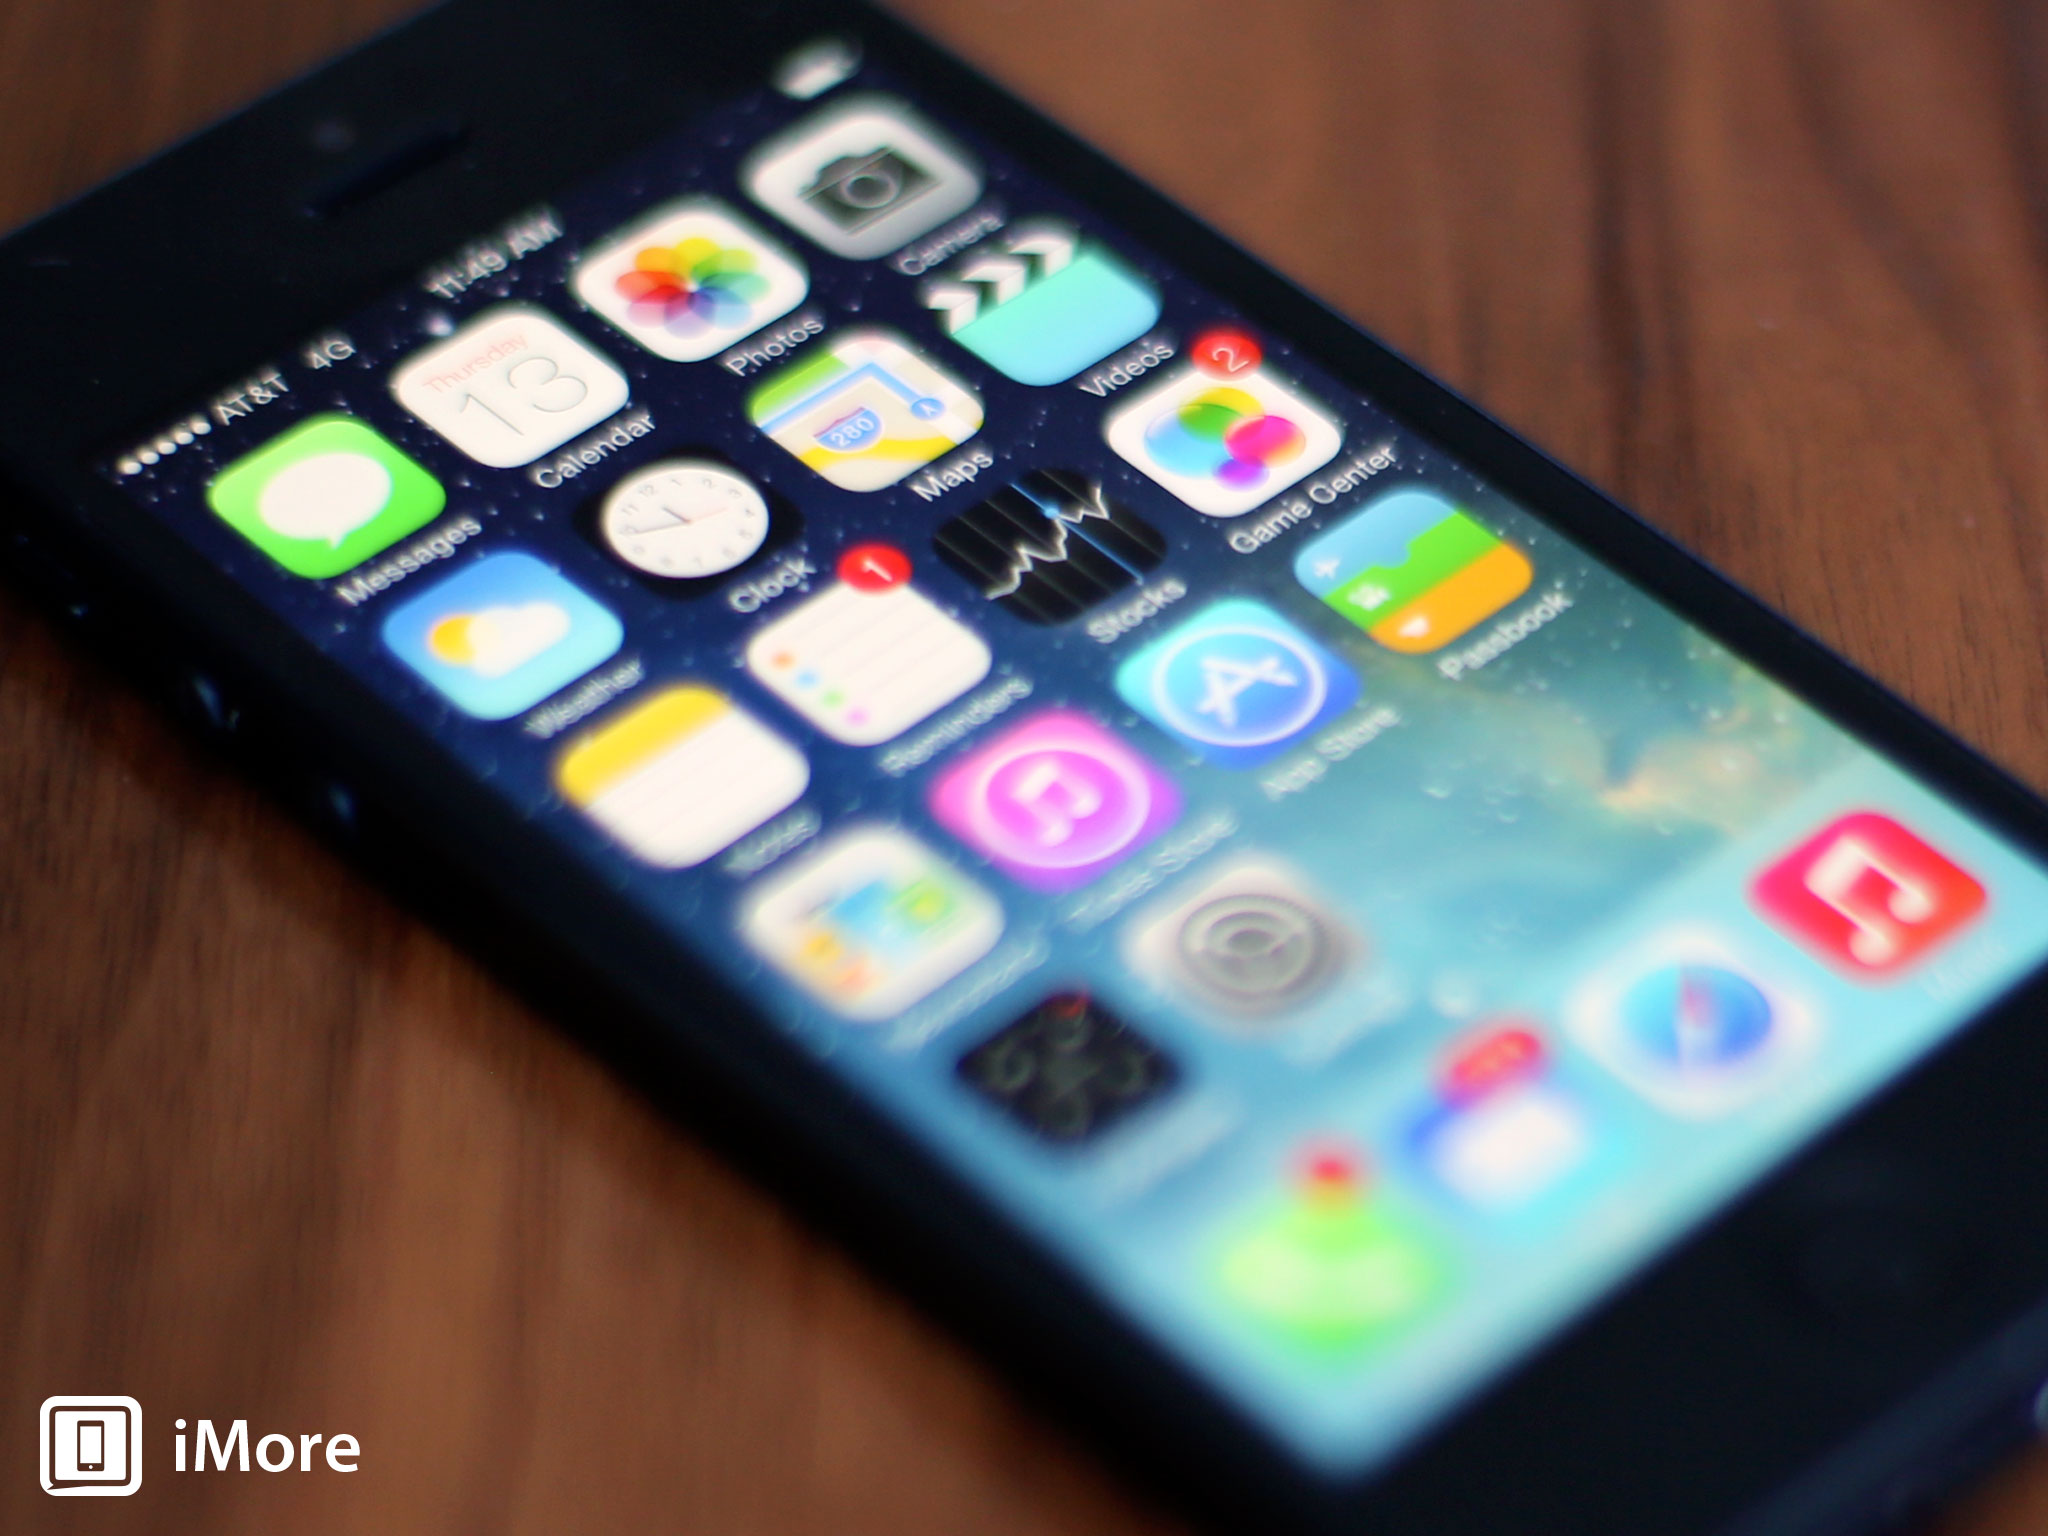 How to downgrade iOS 7 beta back to iOS 6